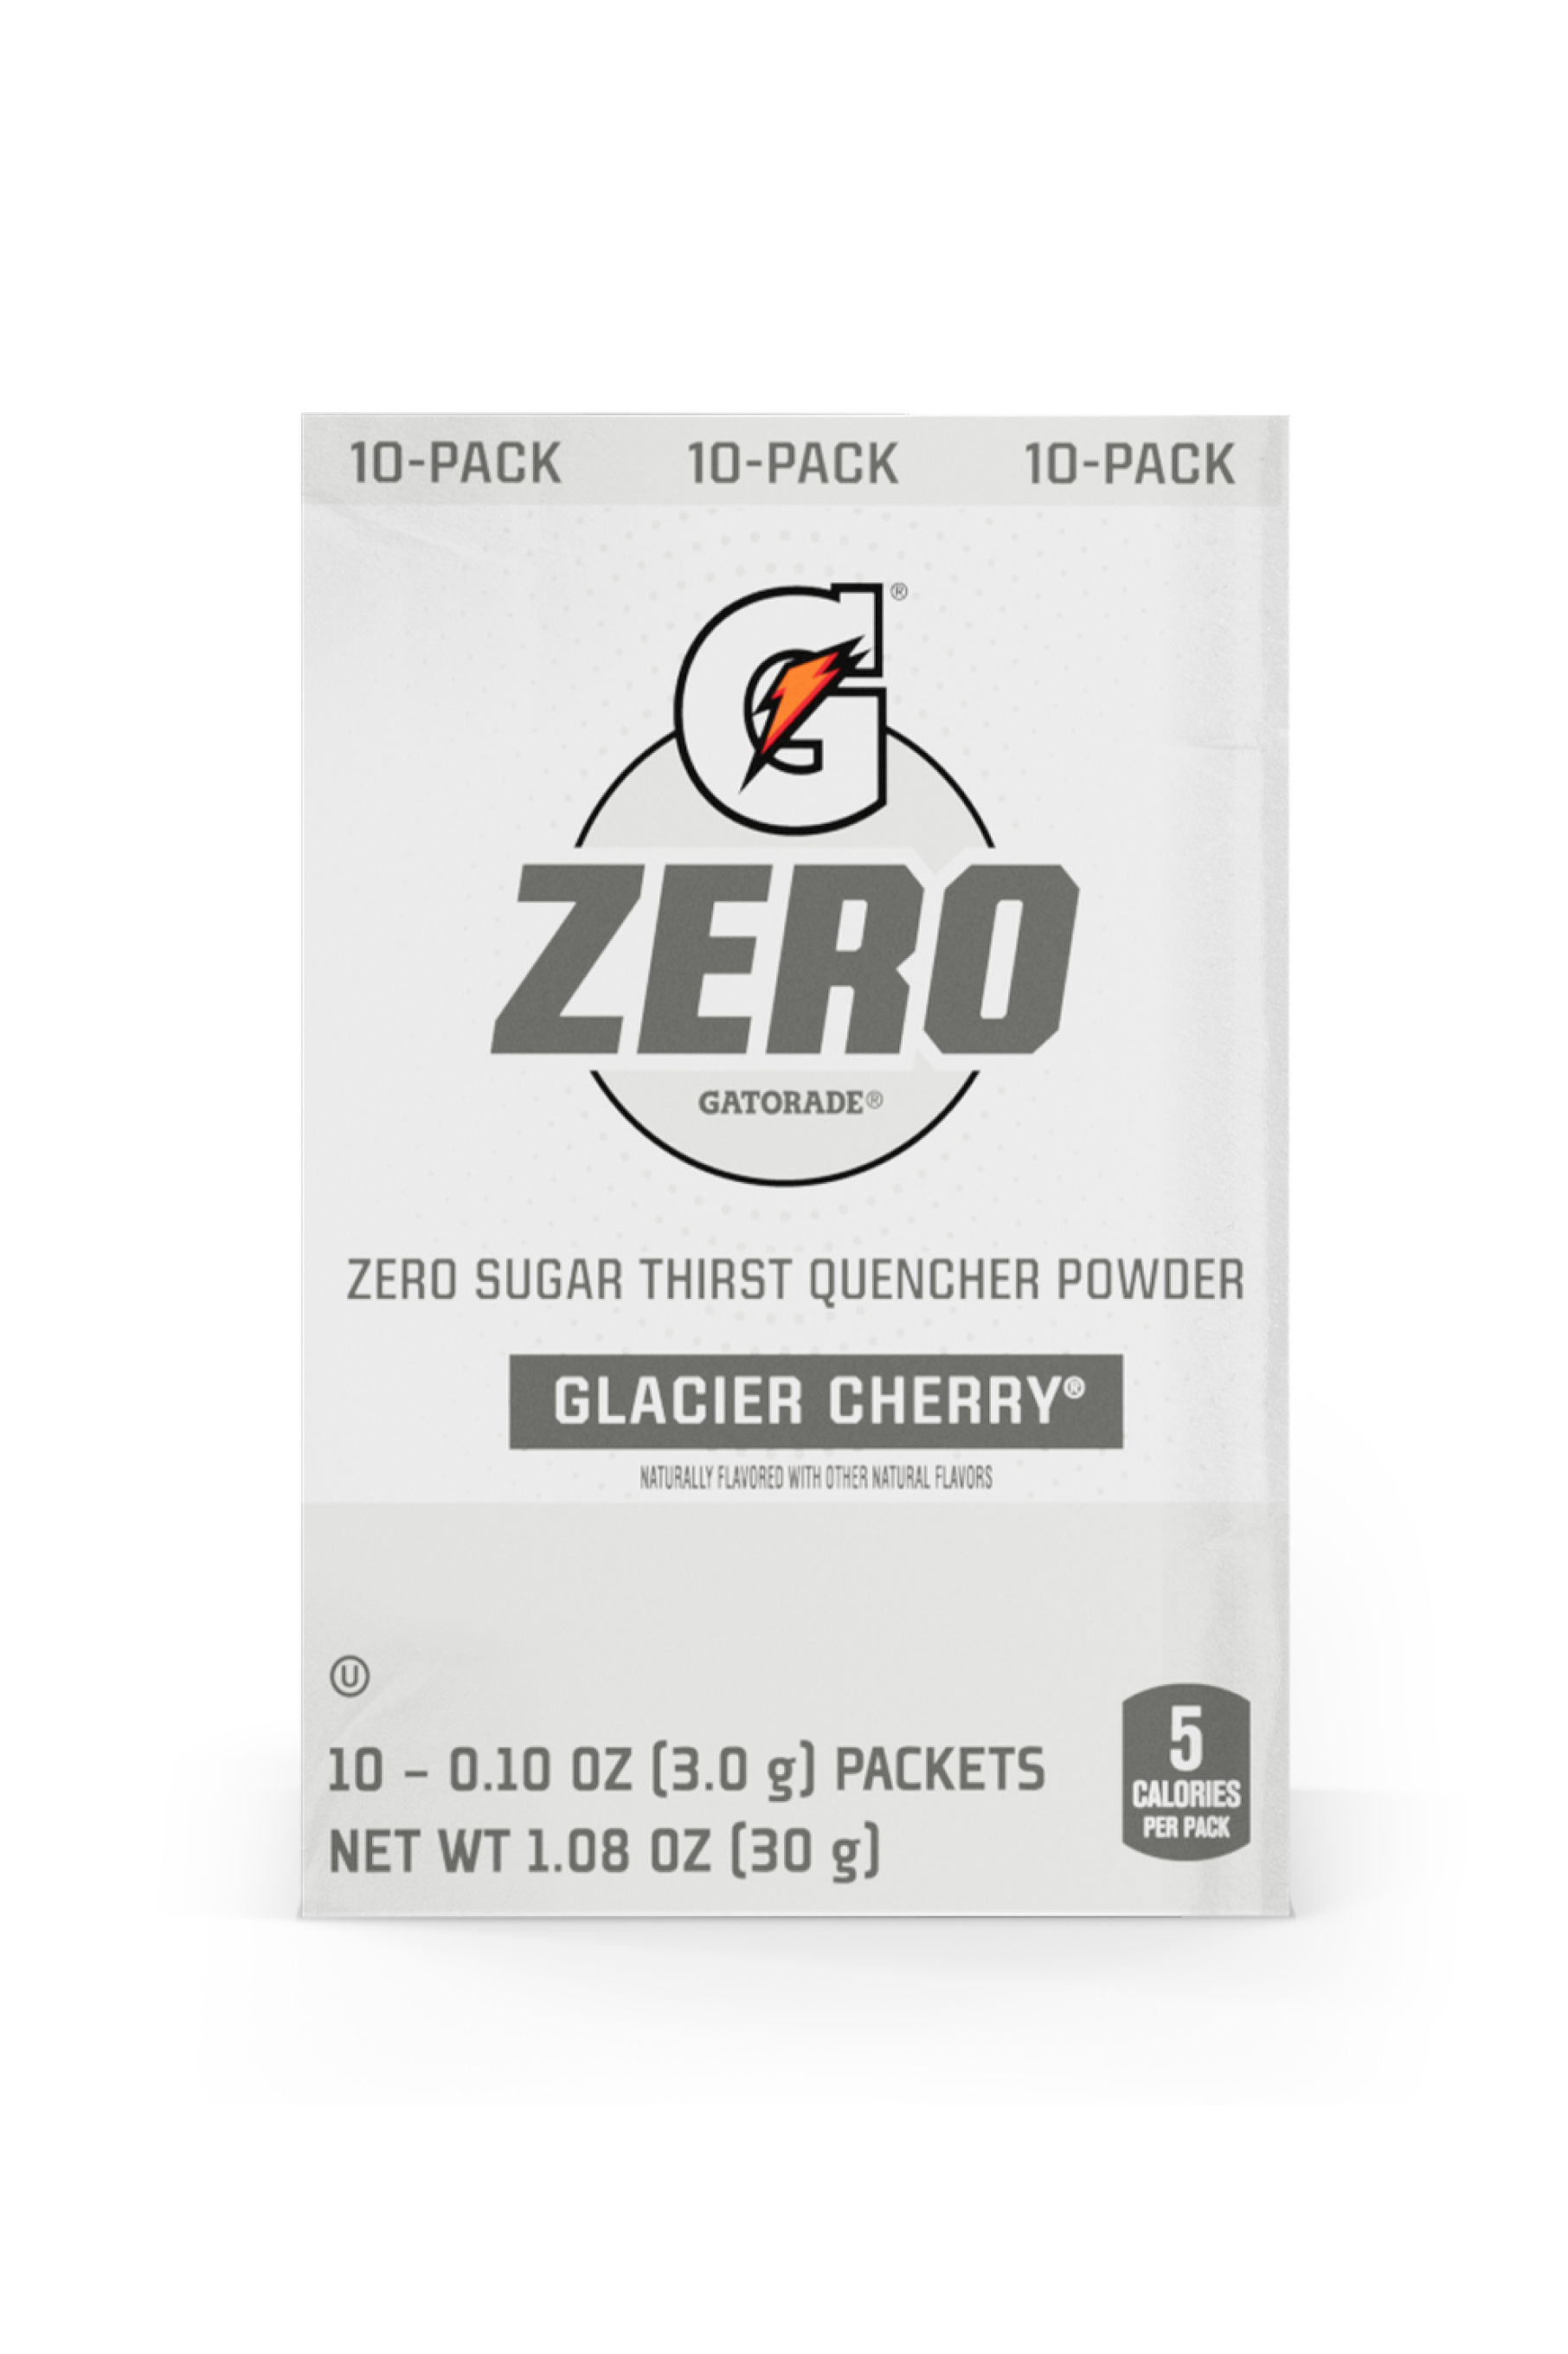 Gatorade zero glacier cherry powder box of 10